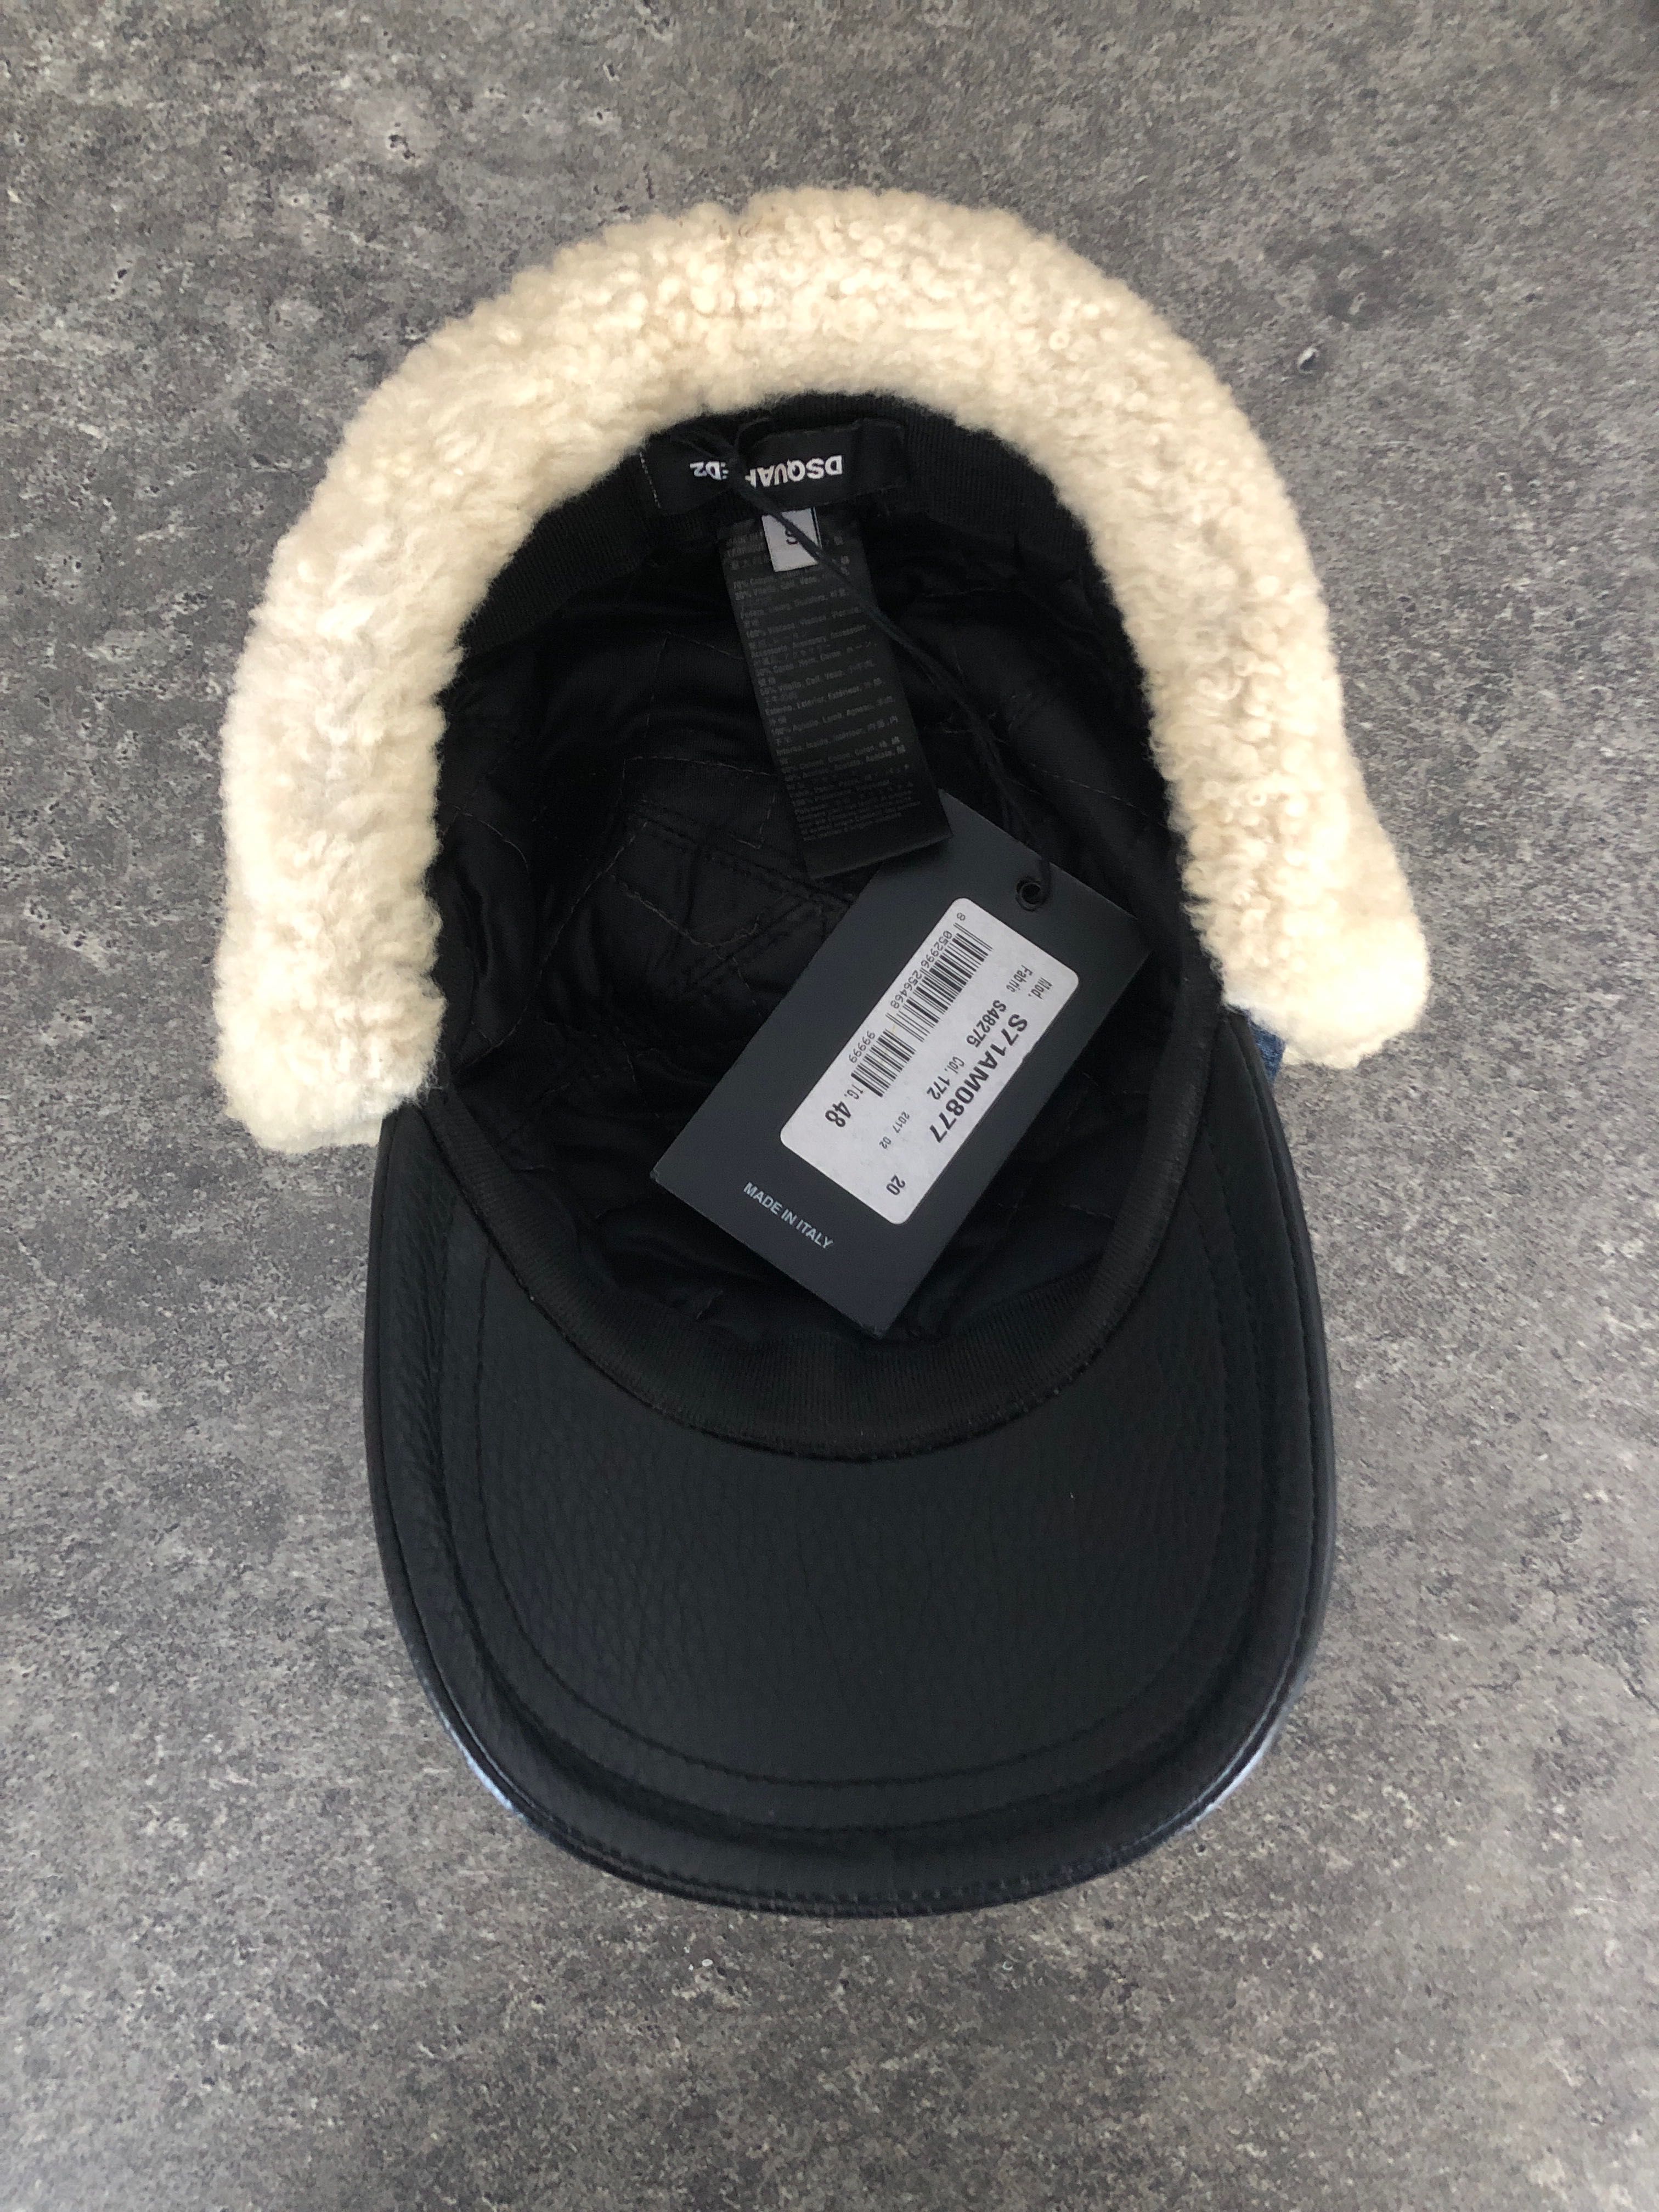 Dsquared2 Winter hat (authentic) Rare